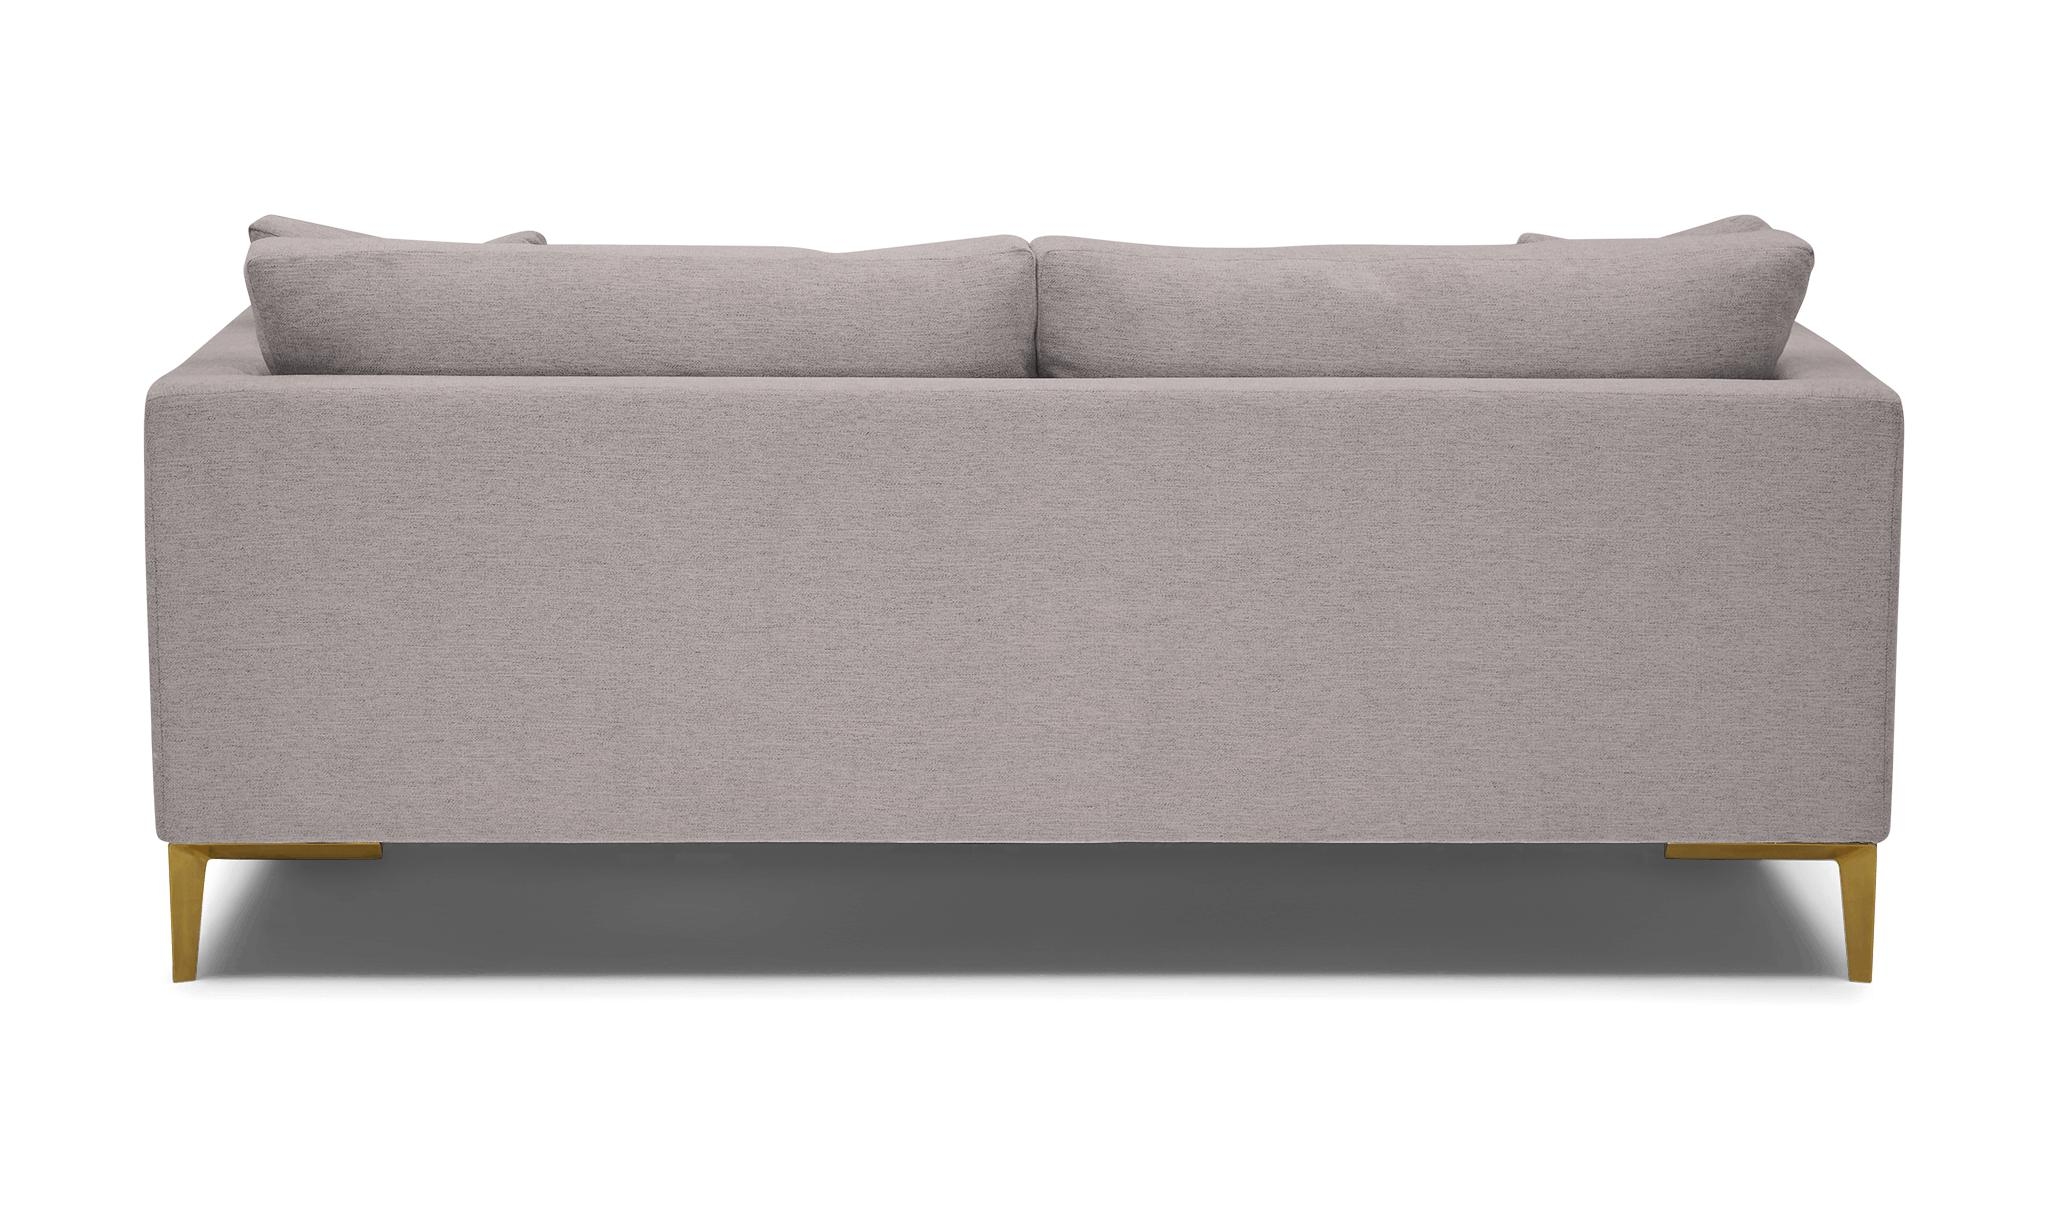 Purple Ainsley Mid Century Modern Sofa - Sunbrella Premier Wisteria - Image 4